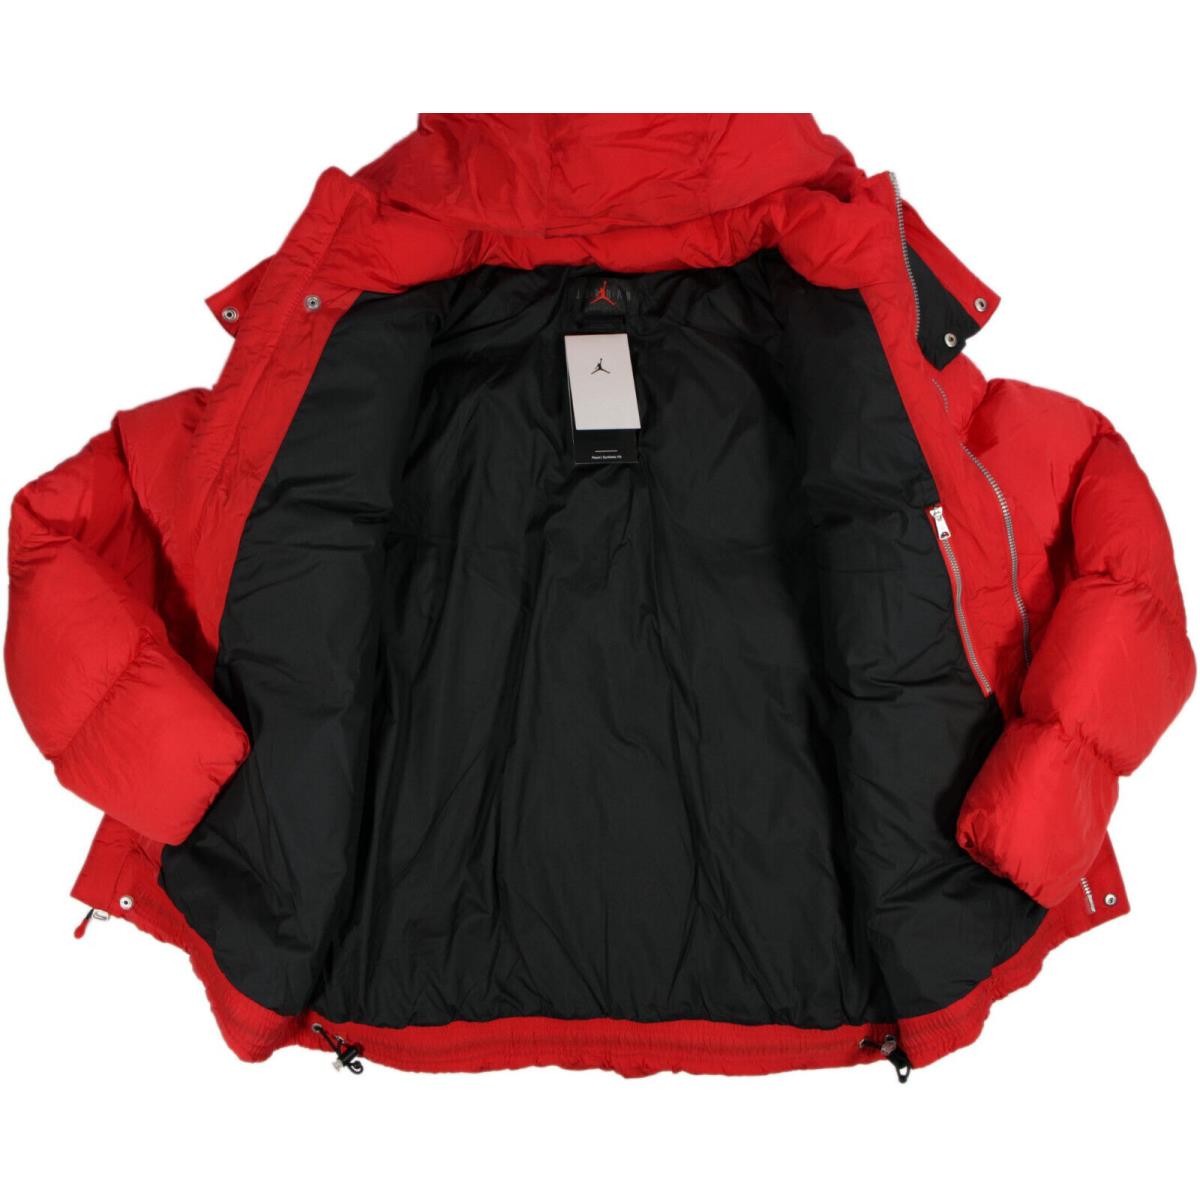 Nike Air Jordan Essentials Statement Puffer Jacket- NEW-$225 Red Heavy Puff Coat